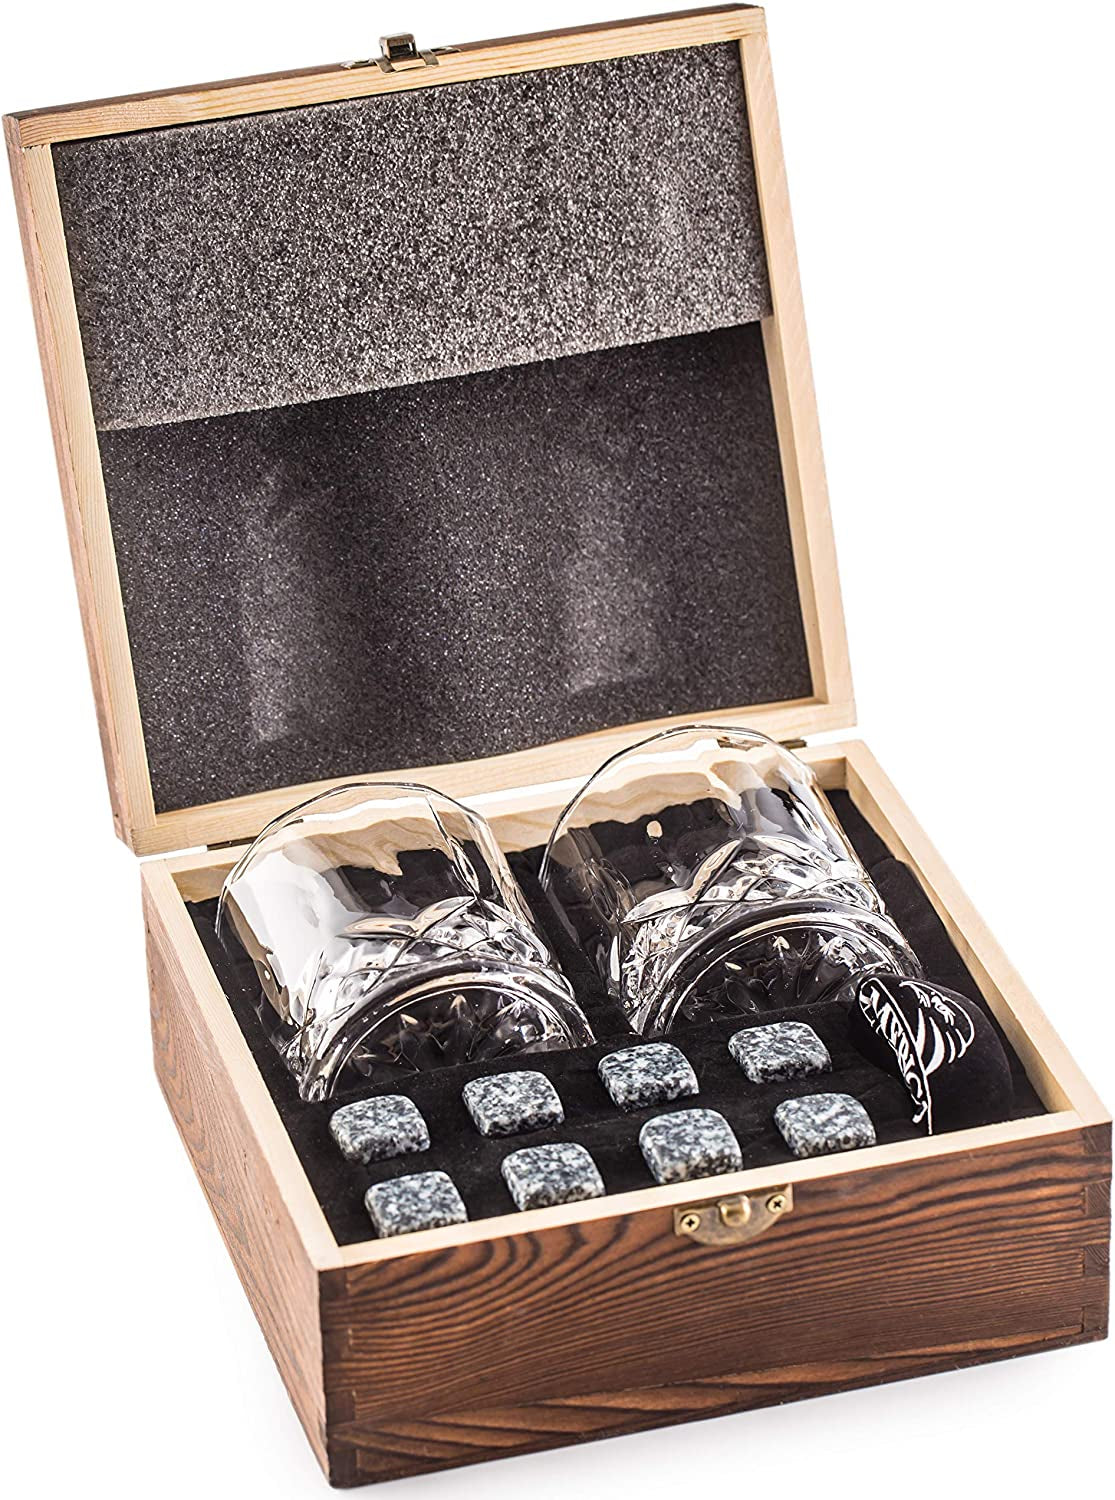  Luxury Whiskey Stones Gift Set